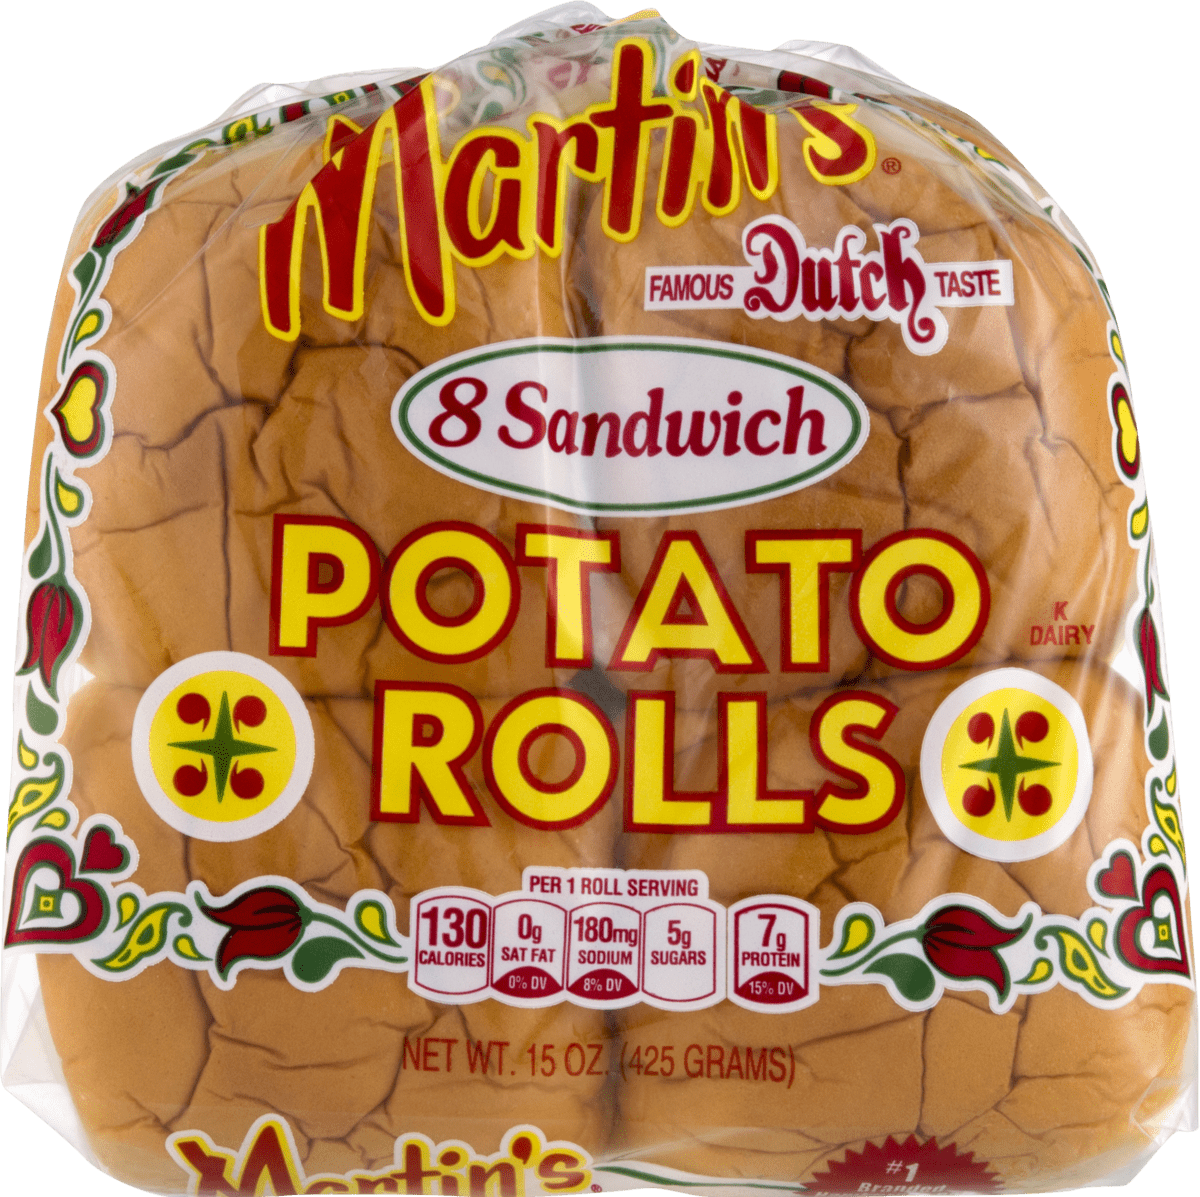 Martin's potato rolls face boycott calls over owner's politics
